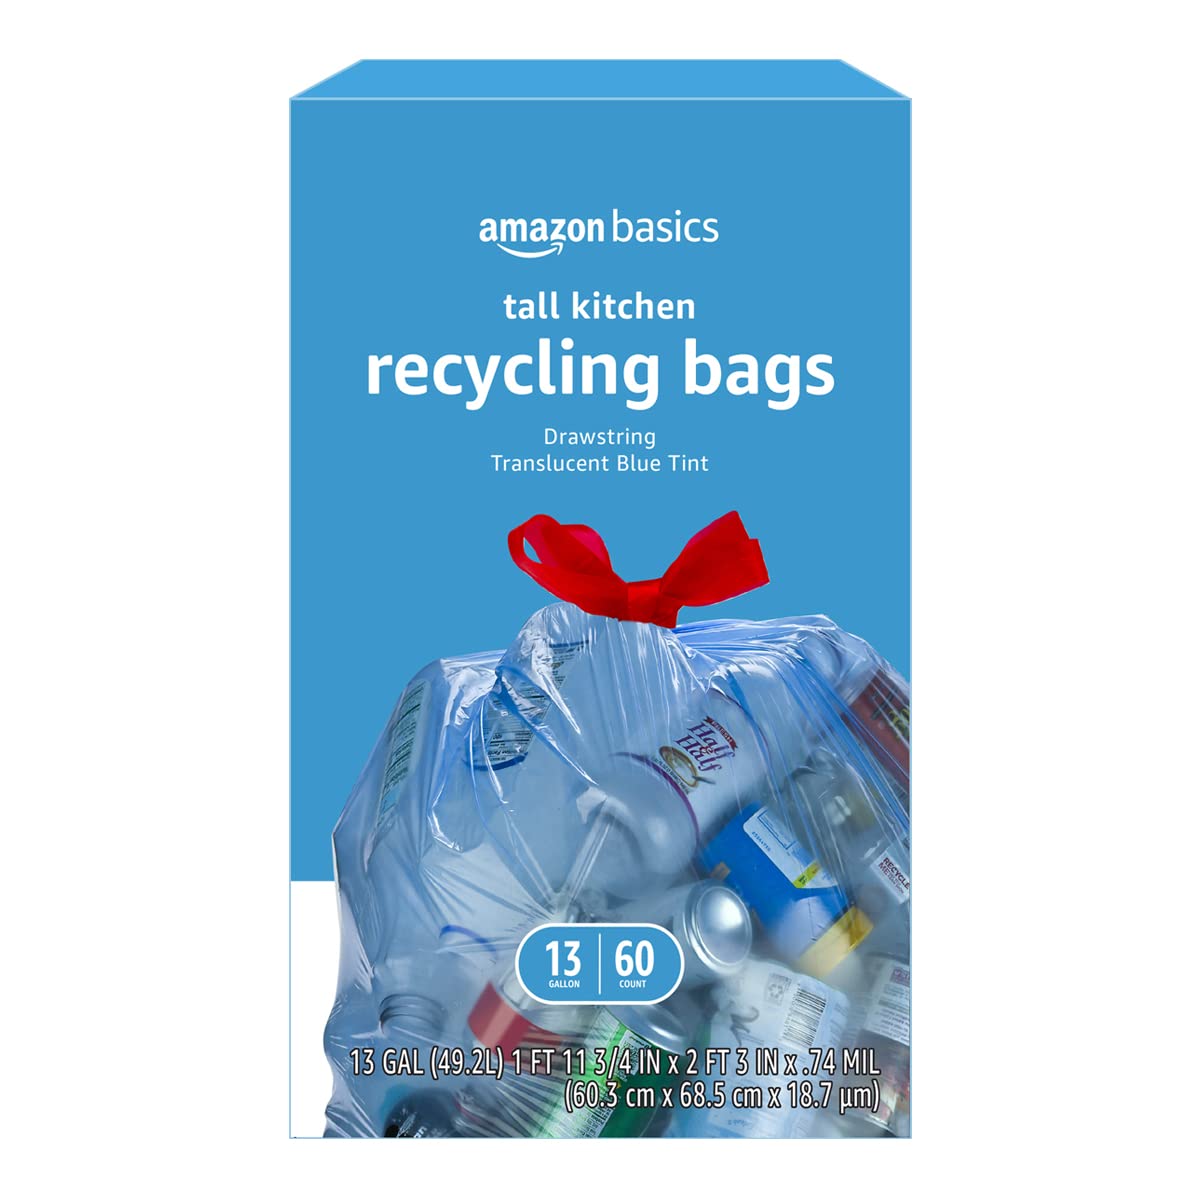 Glad Tall Kitchen Bags, Recycling, Blue Drawstring, 13 Gallon, Trash Bags